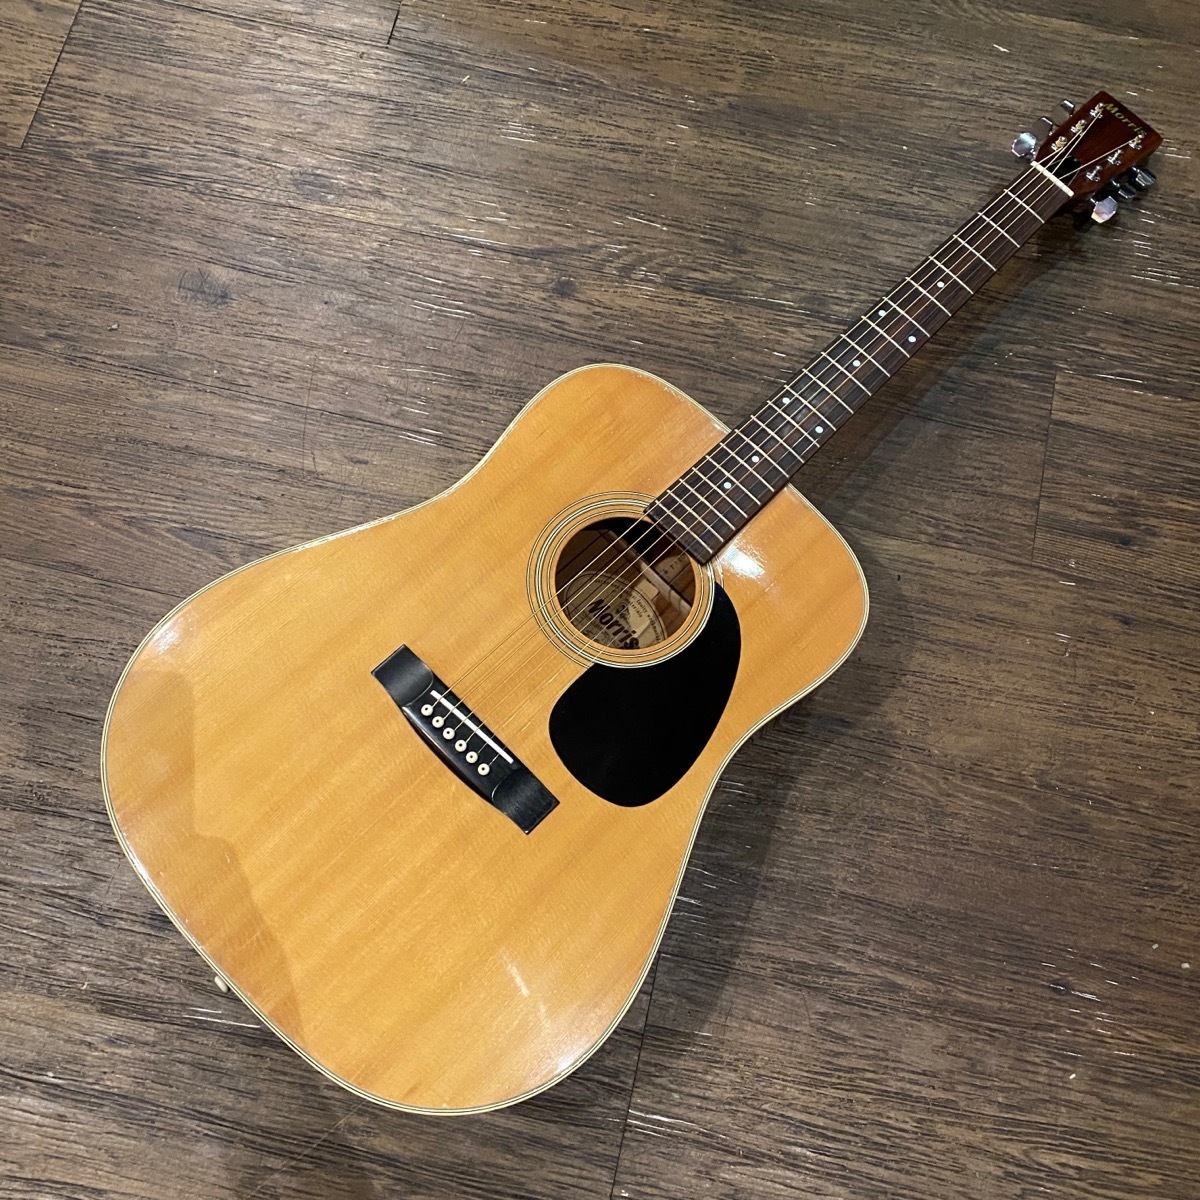 Morris W-20 Acoustic Guitar Made in Japan アコーステ肣ックギター 胢ーリス -GrunSound-x168-